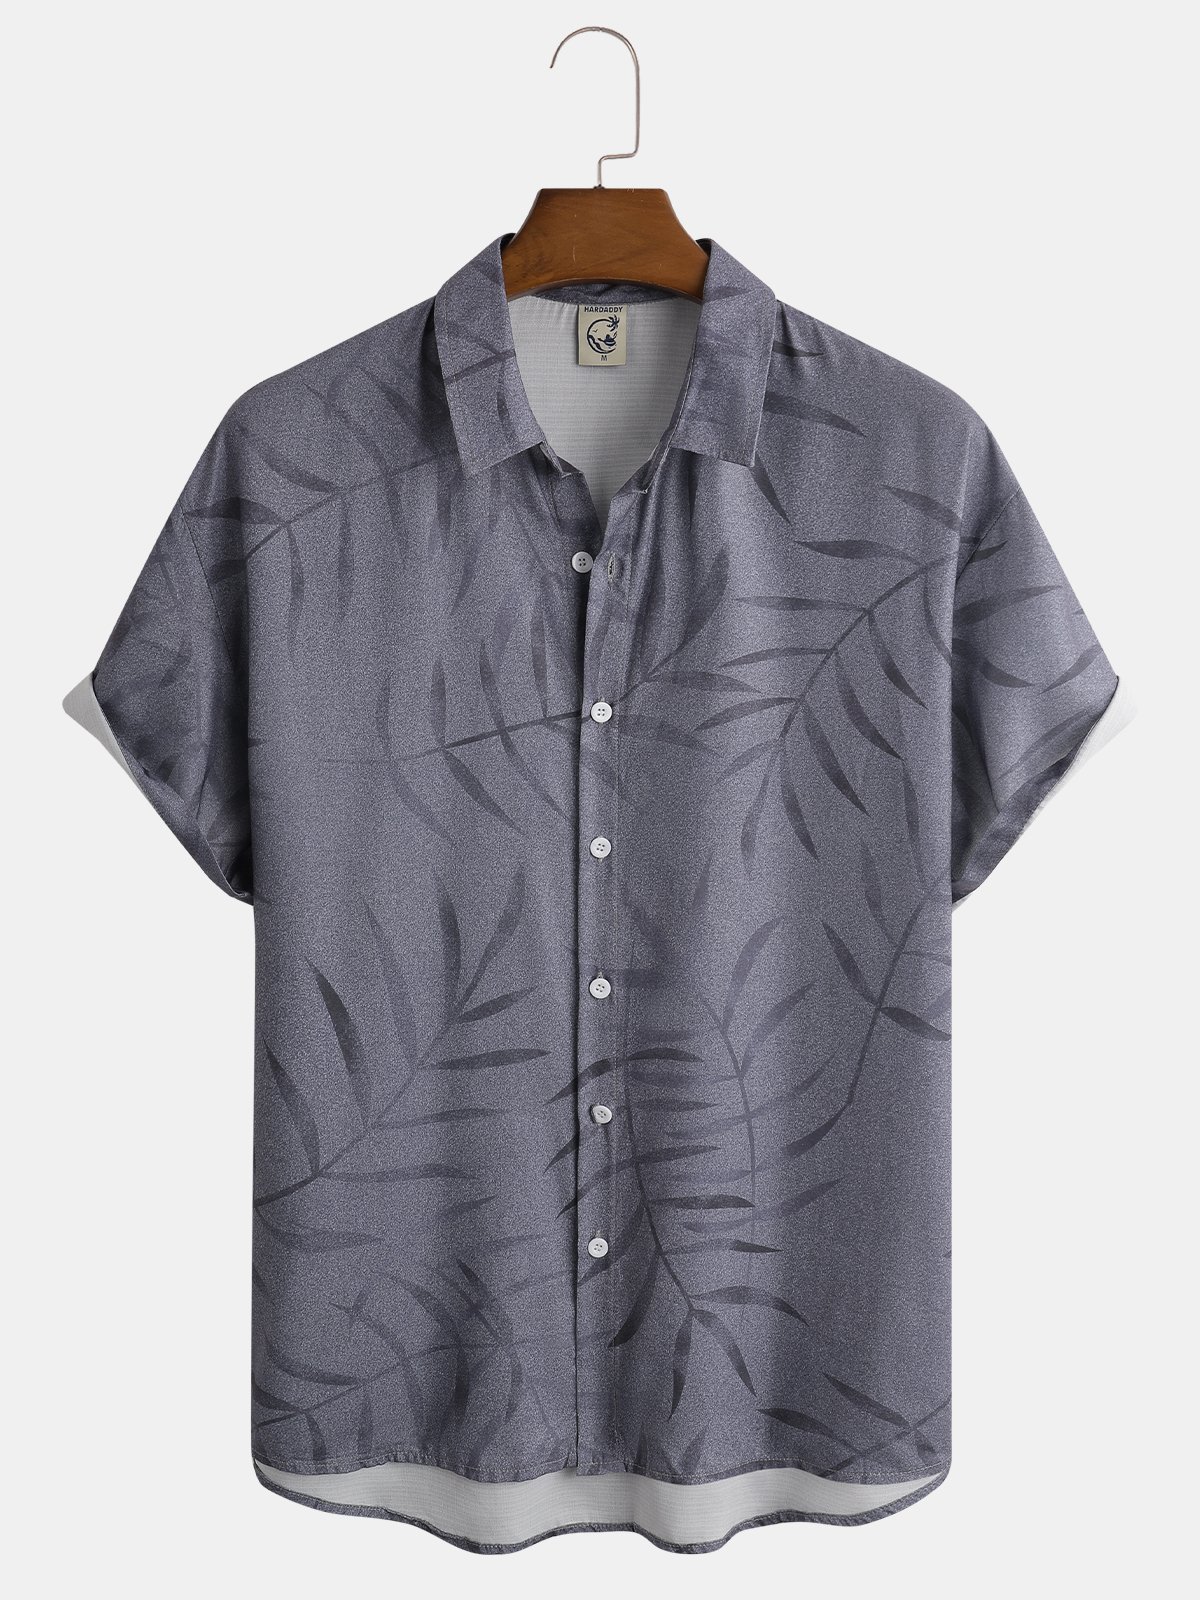 Leaf Short Sleeve Resort Shirt